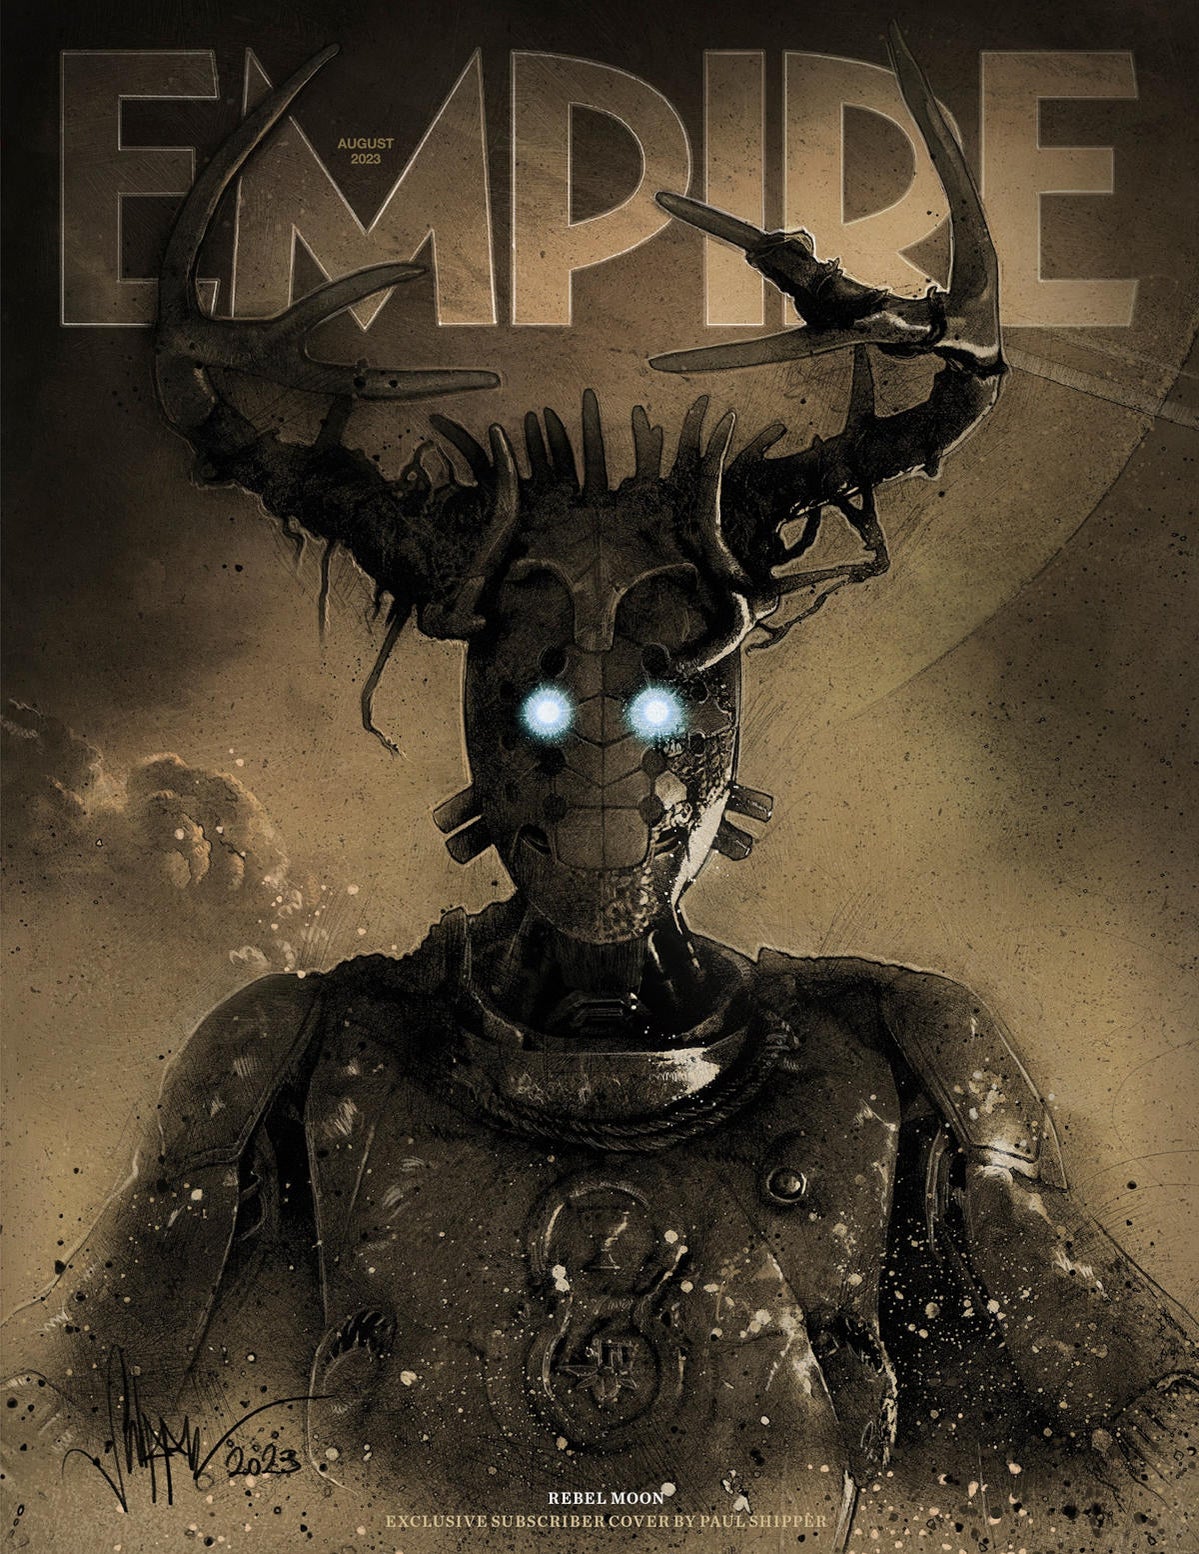 rebel-moon-empire-covers-robot-jimmy.jpg